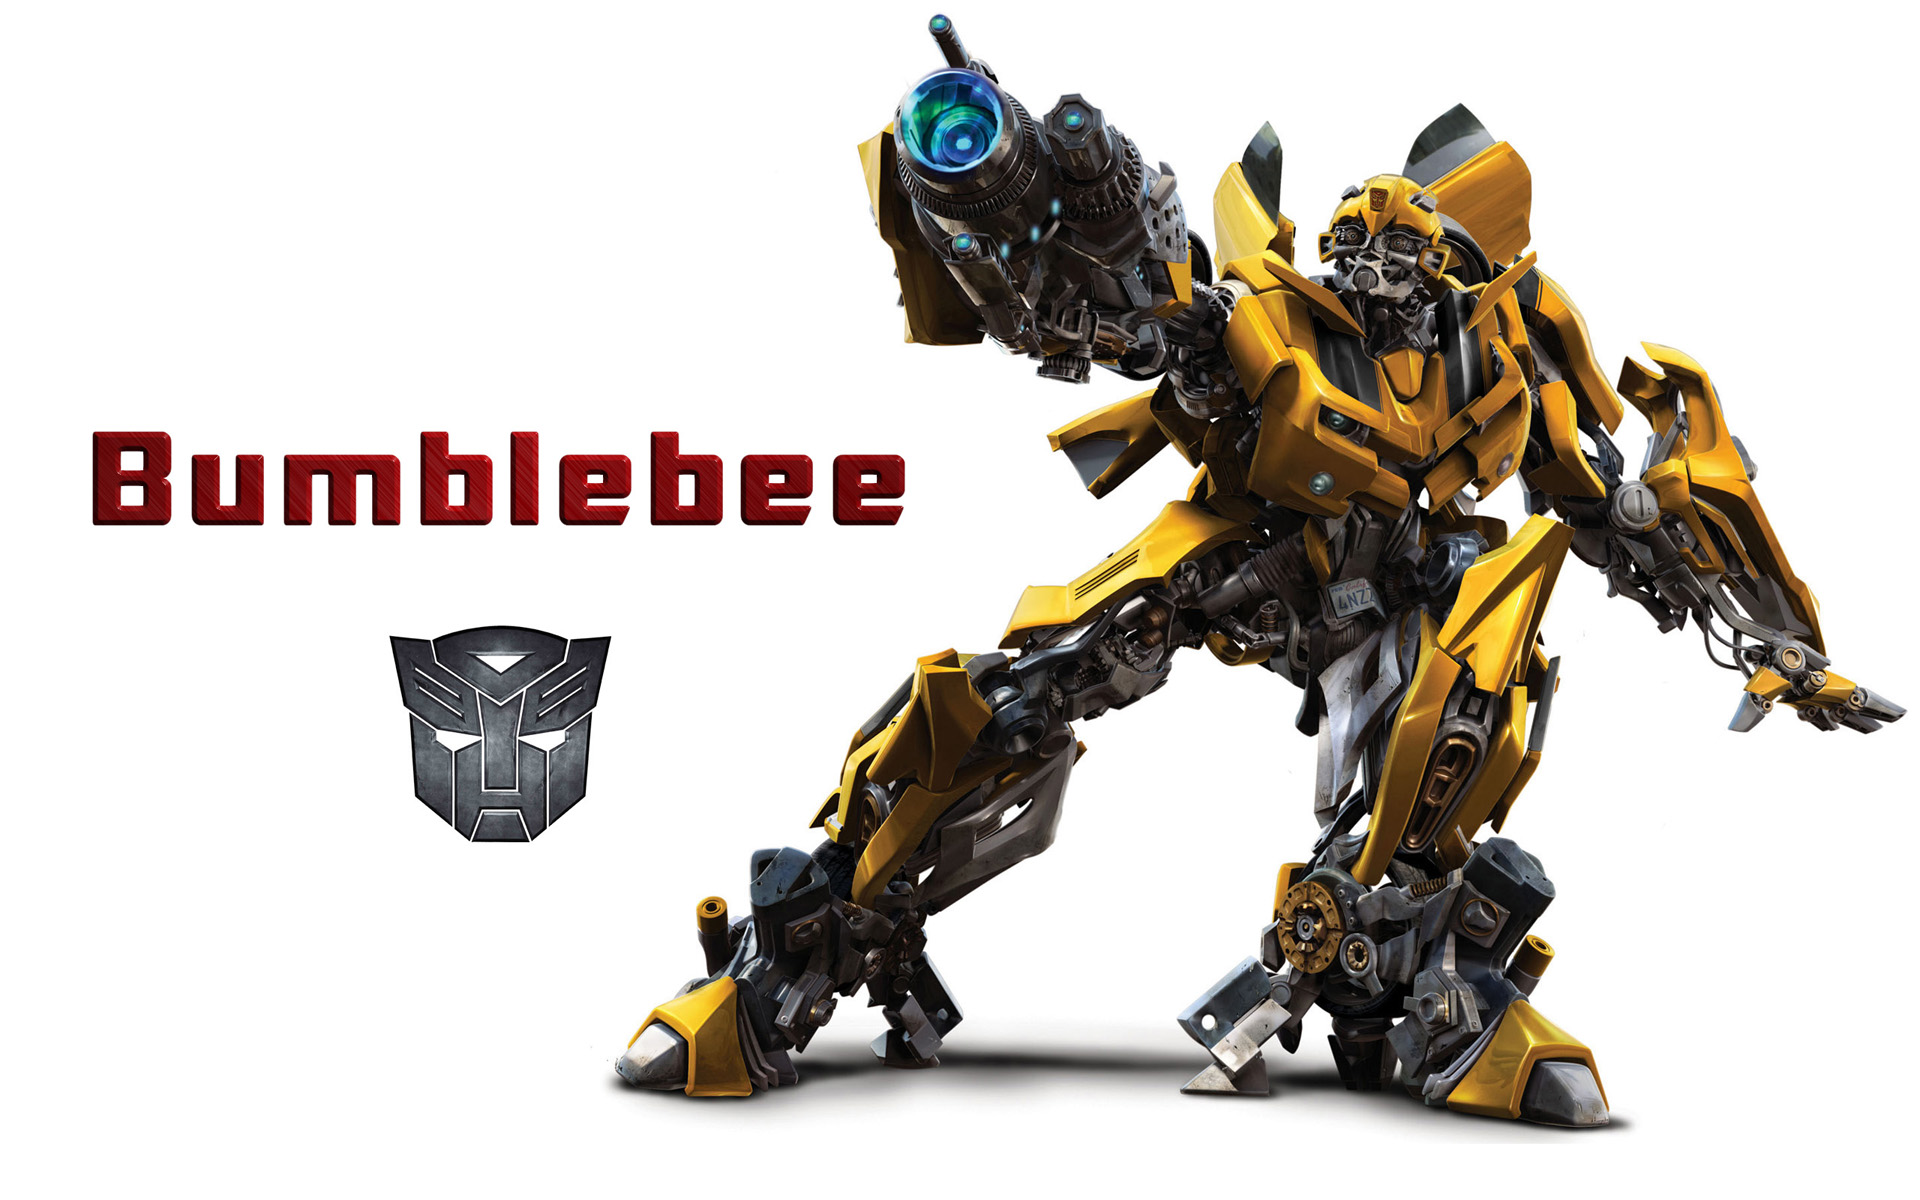 Transformer bumblebee wallpaper